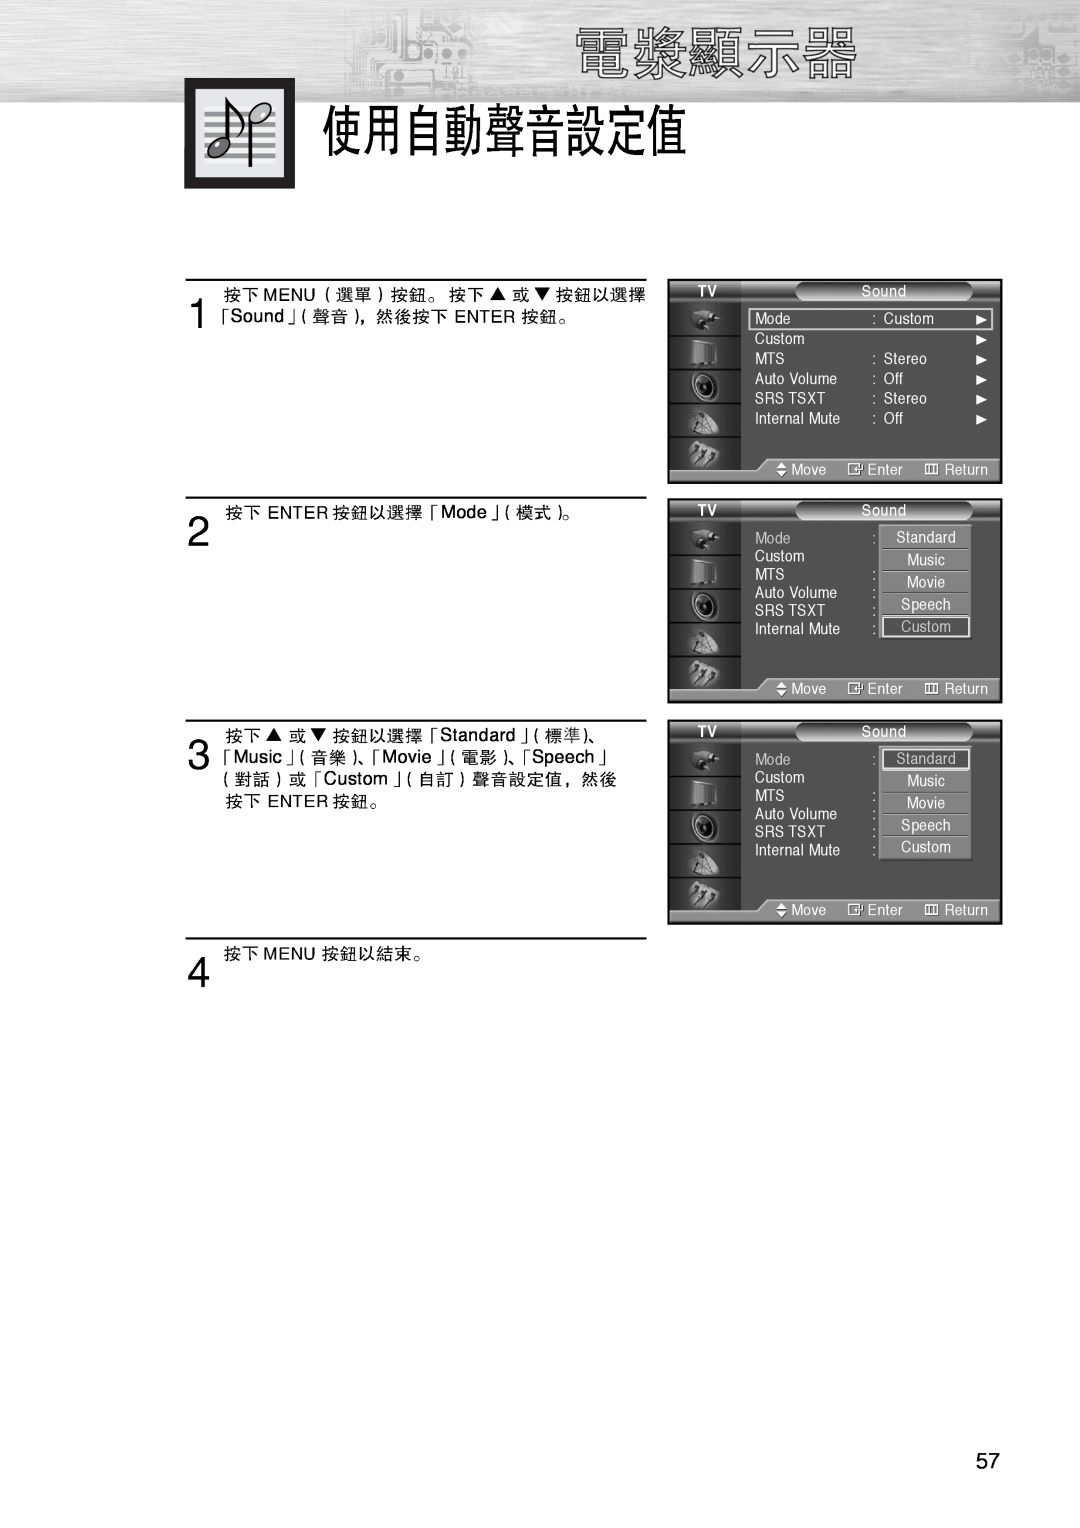 Samsung PL-42D4S manual Sound Mode Standard MusicMovie Speech Custom, OffCustom, Custom Standard, CustomStandard 